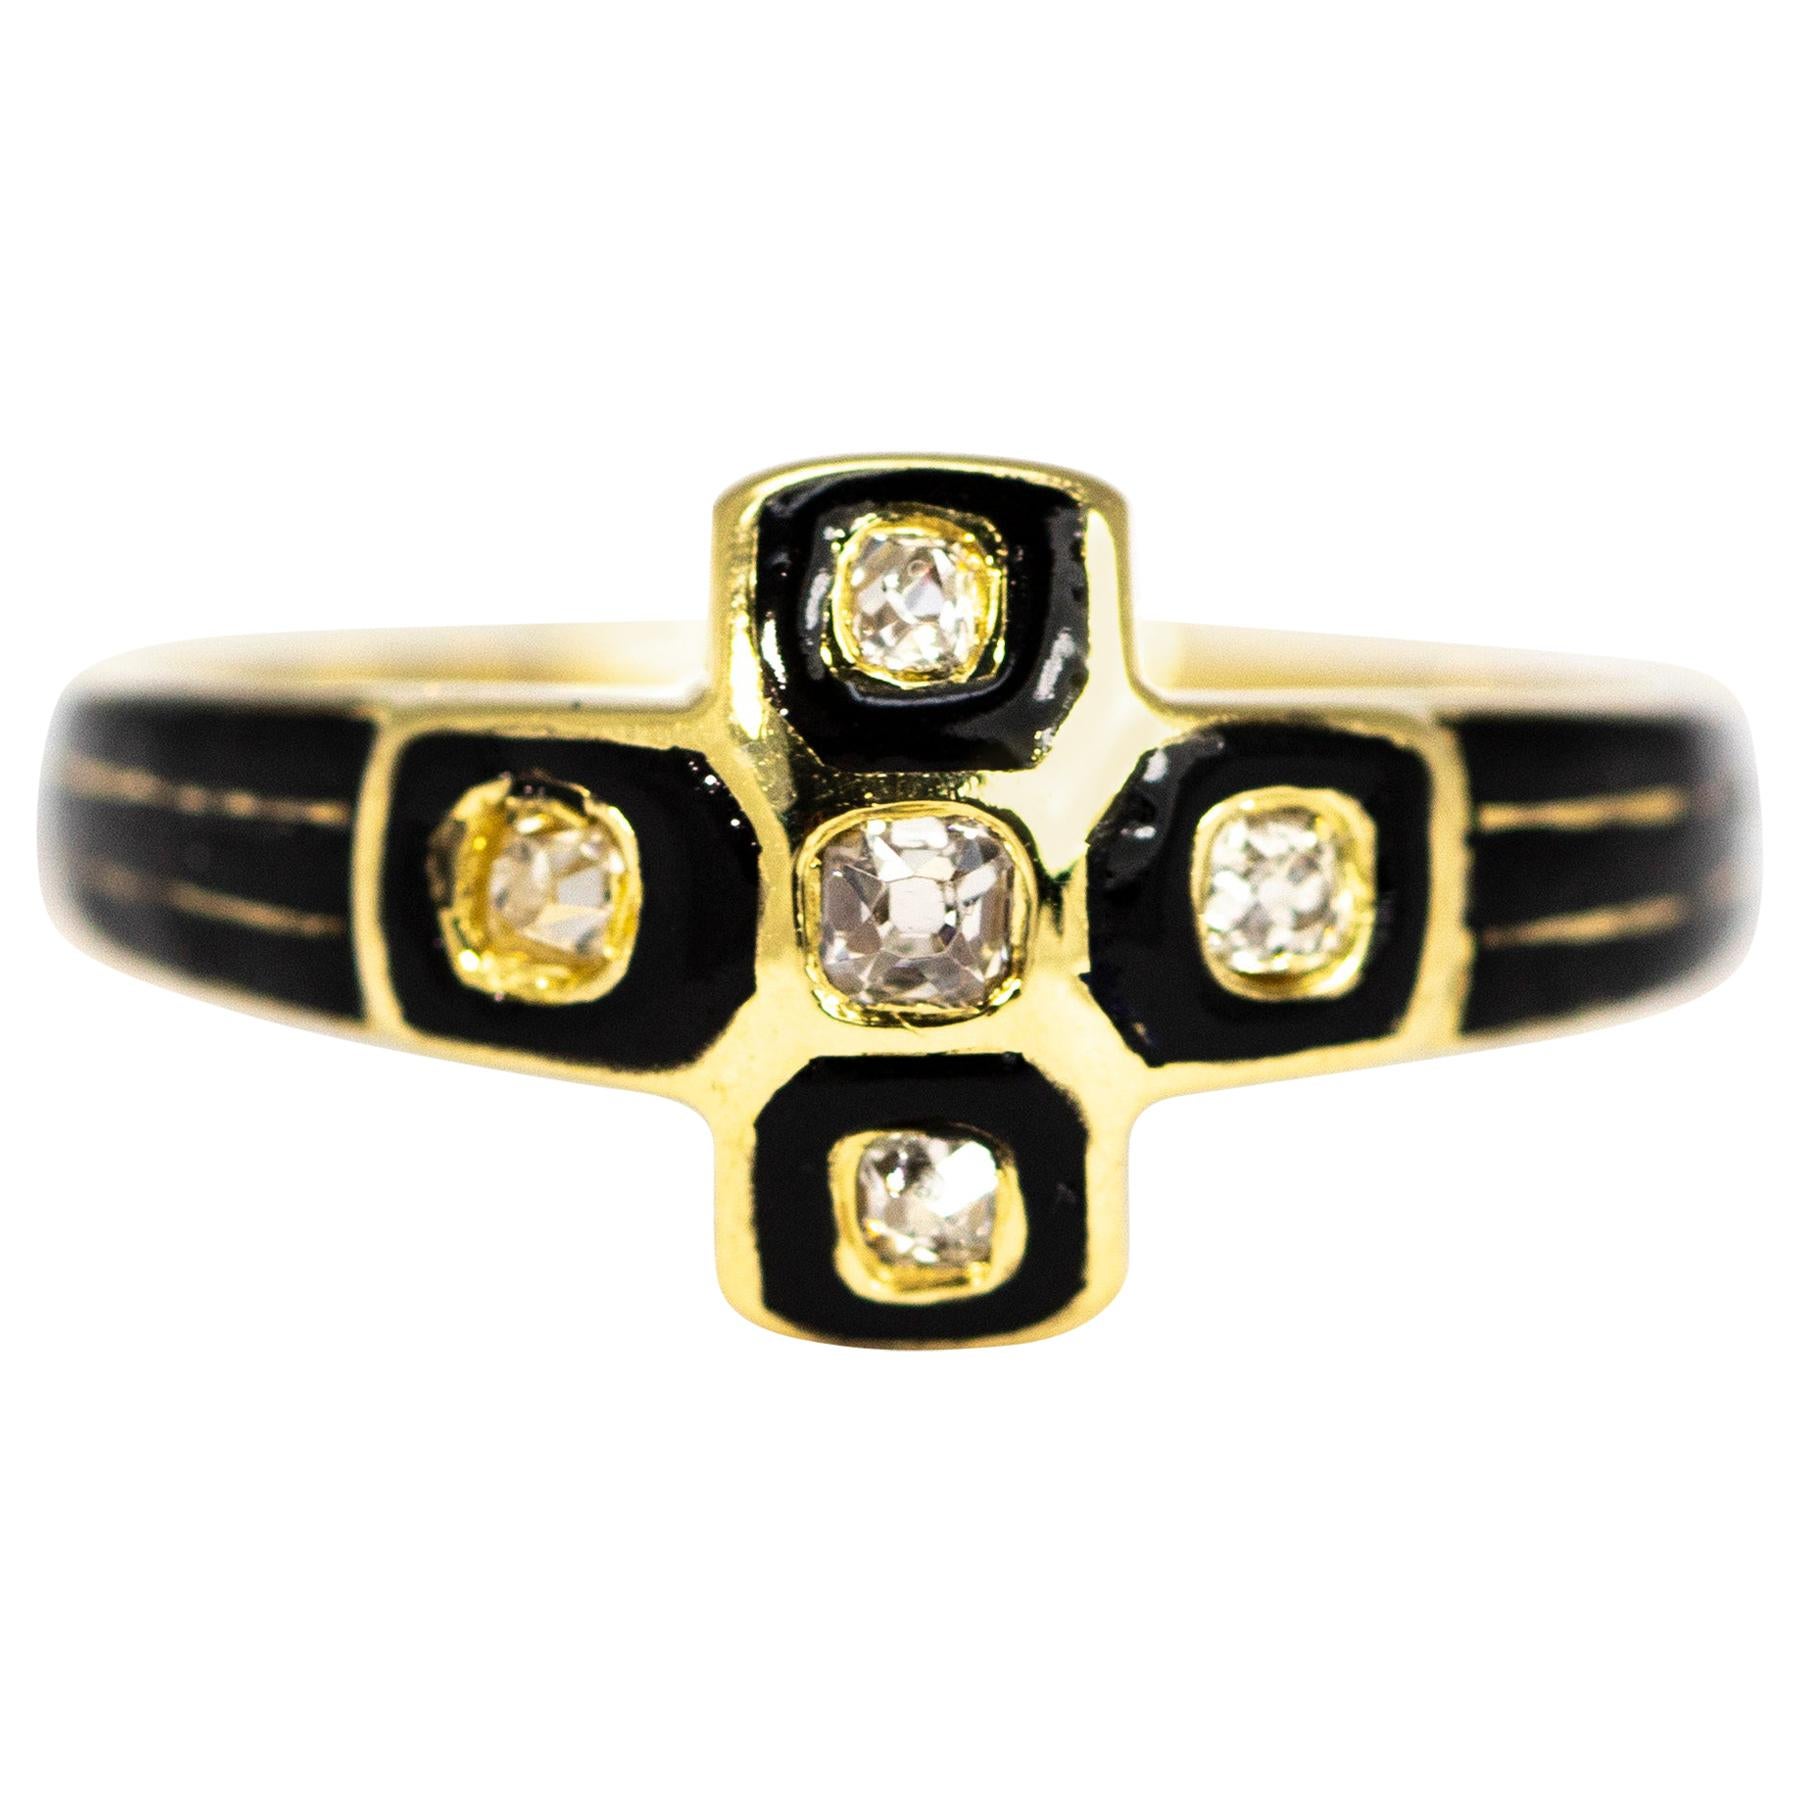 Victorian Diamond and Enamel 18 Carat Gold Ring